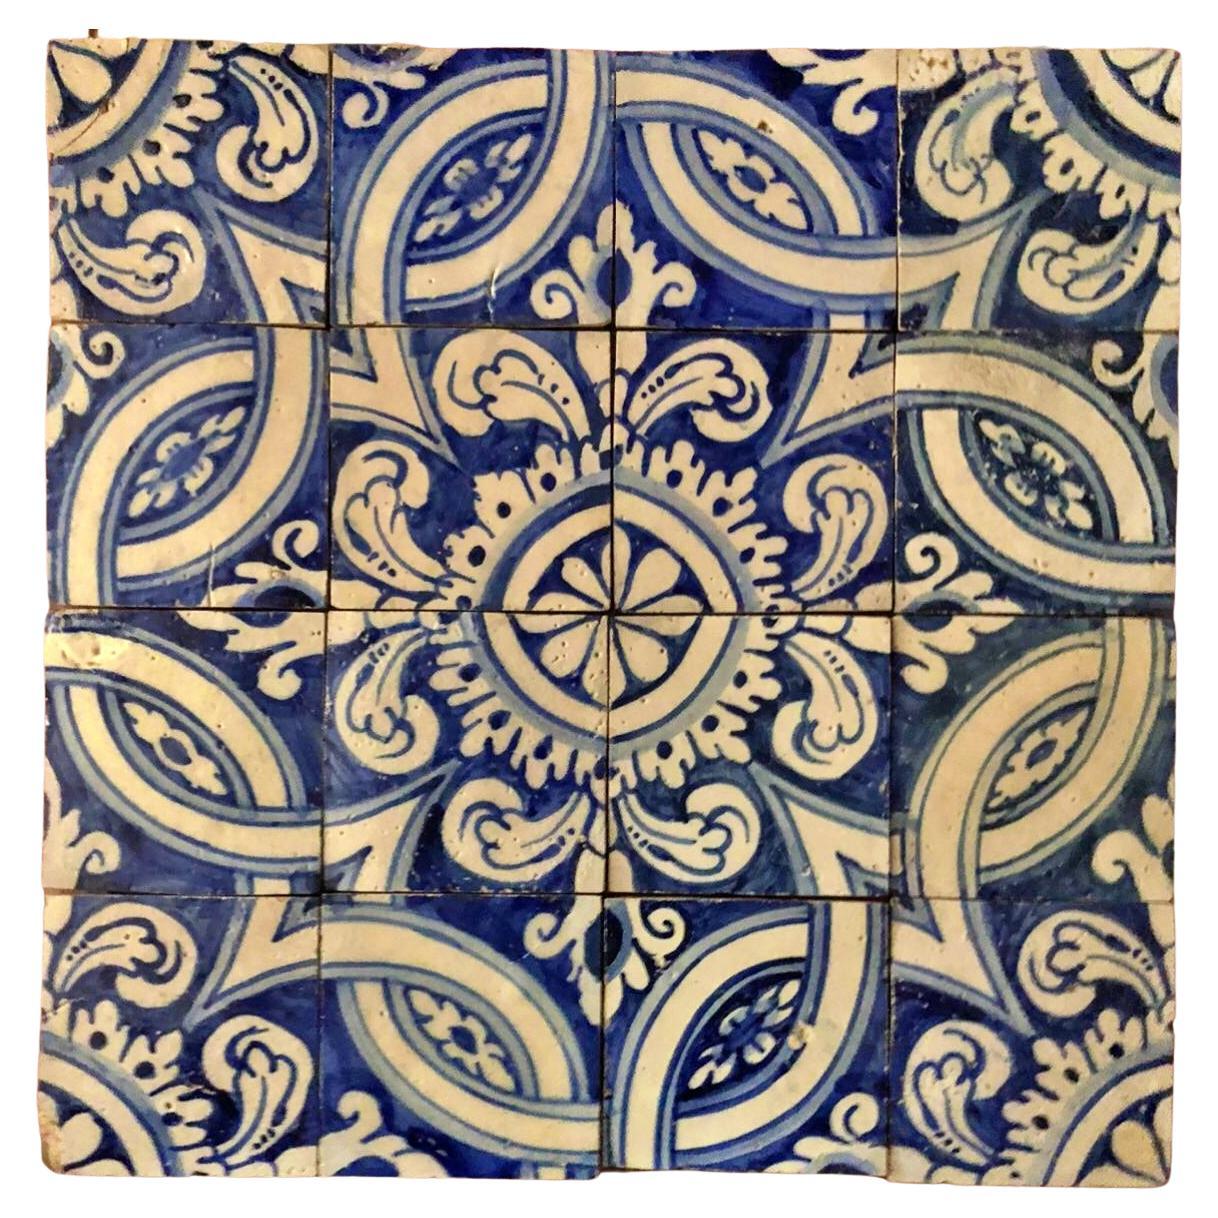 17th Century Portuguese Tile Panel